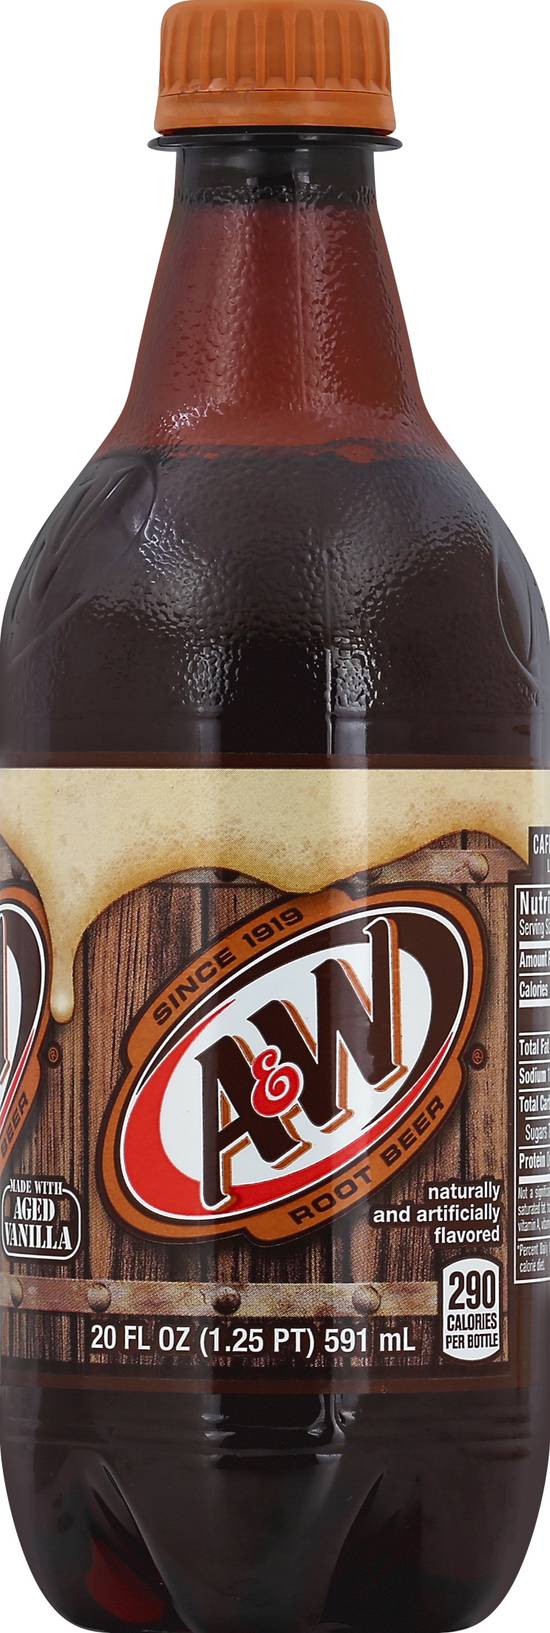 A&W Root Beer Soda (20 fl oz)